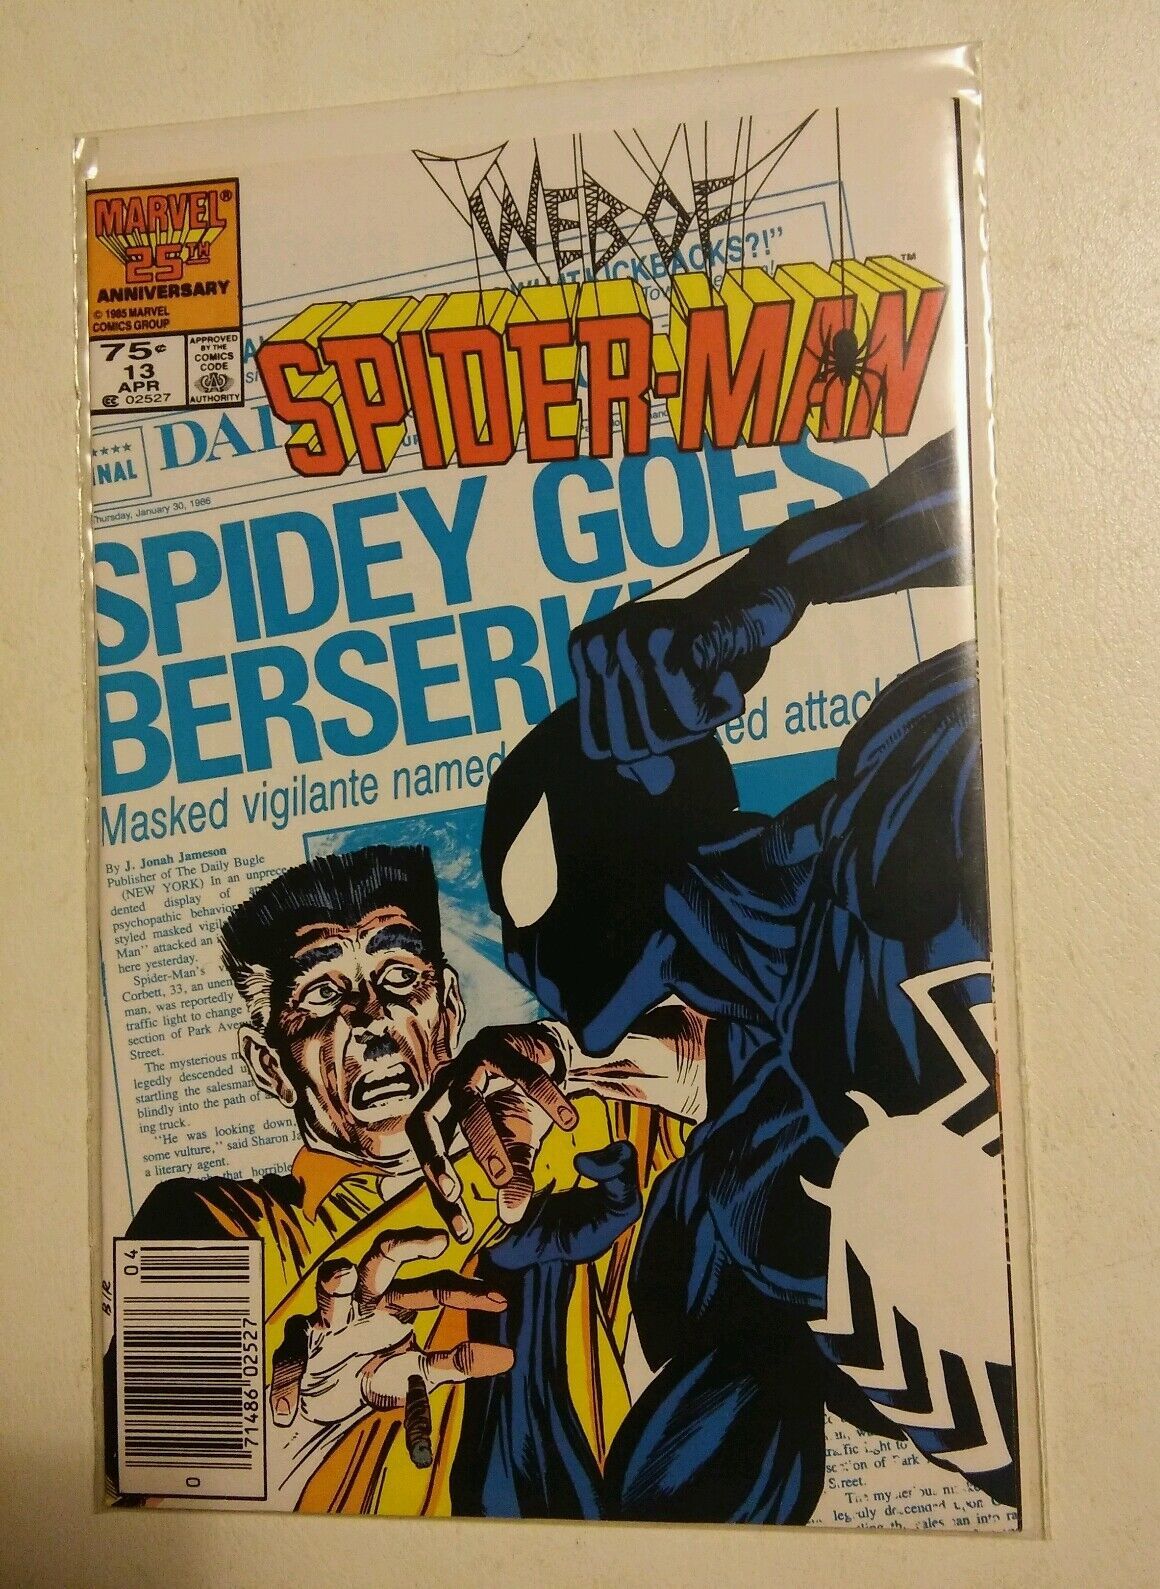 Primary image for 000 Vintage Marvel Comic Book Web of Spider-Man #13 Spidey Goes Berserk